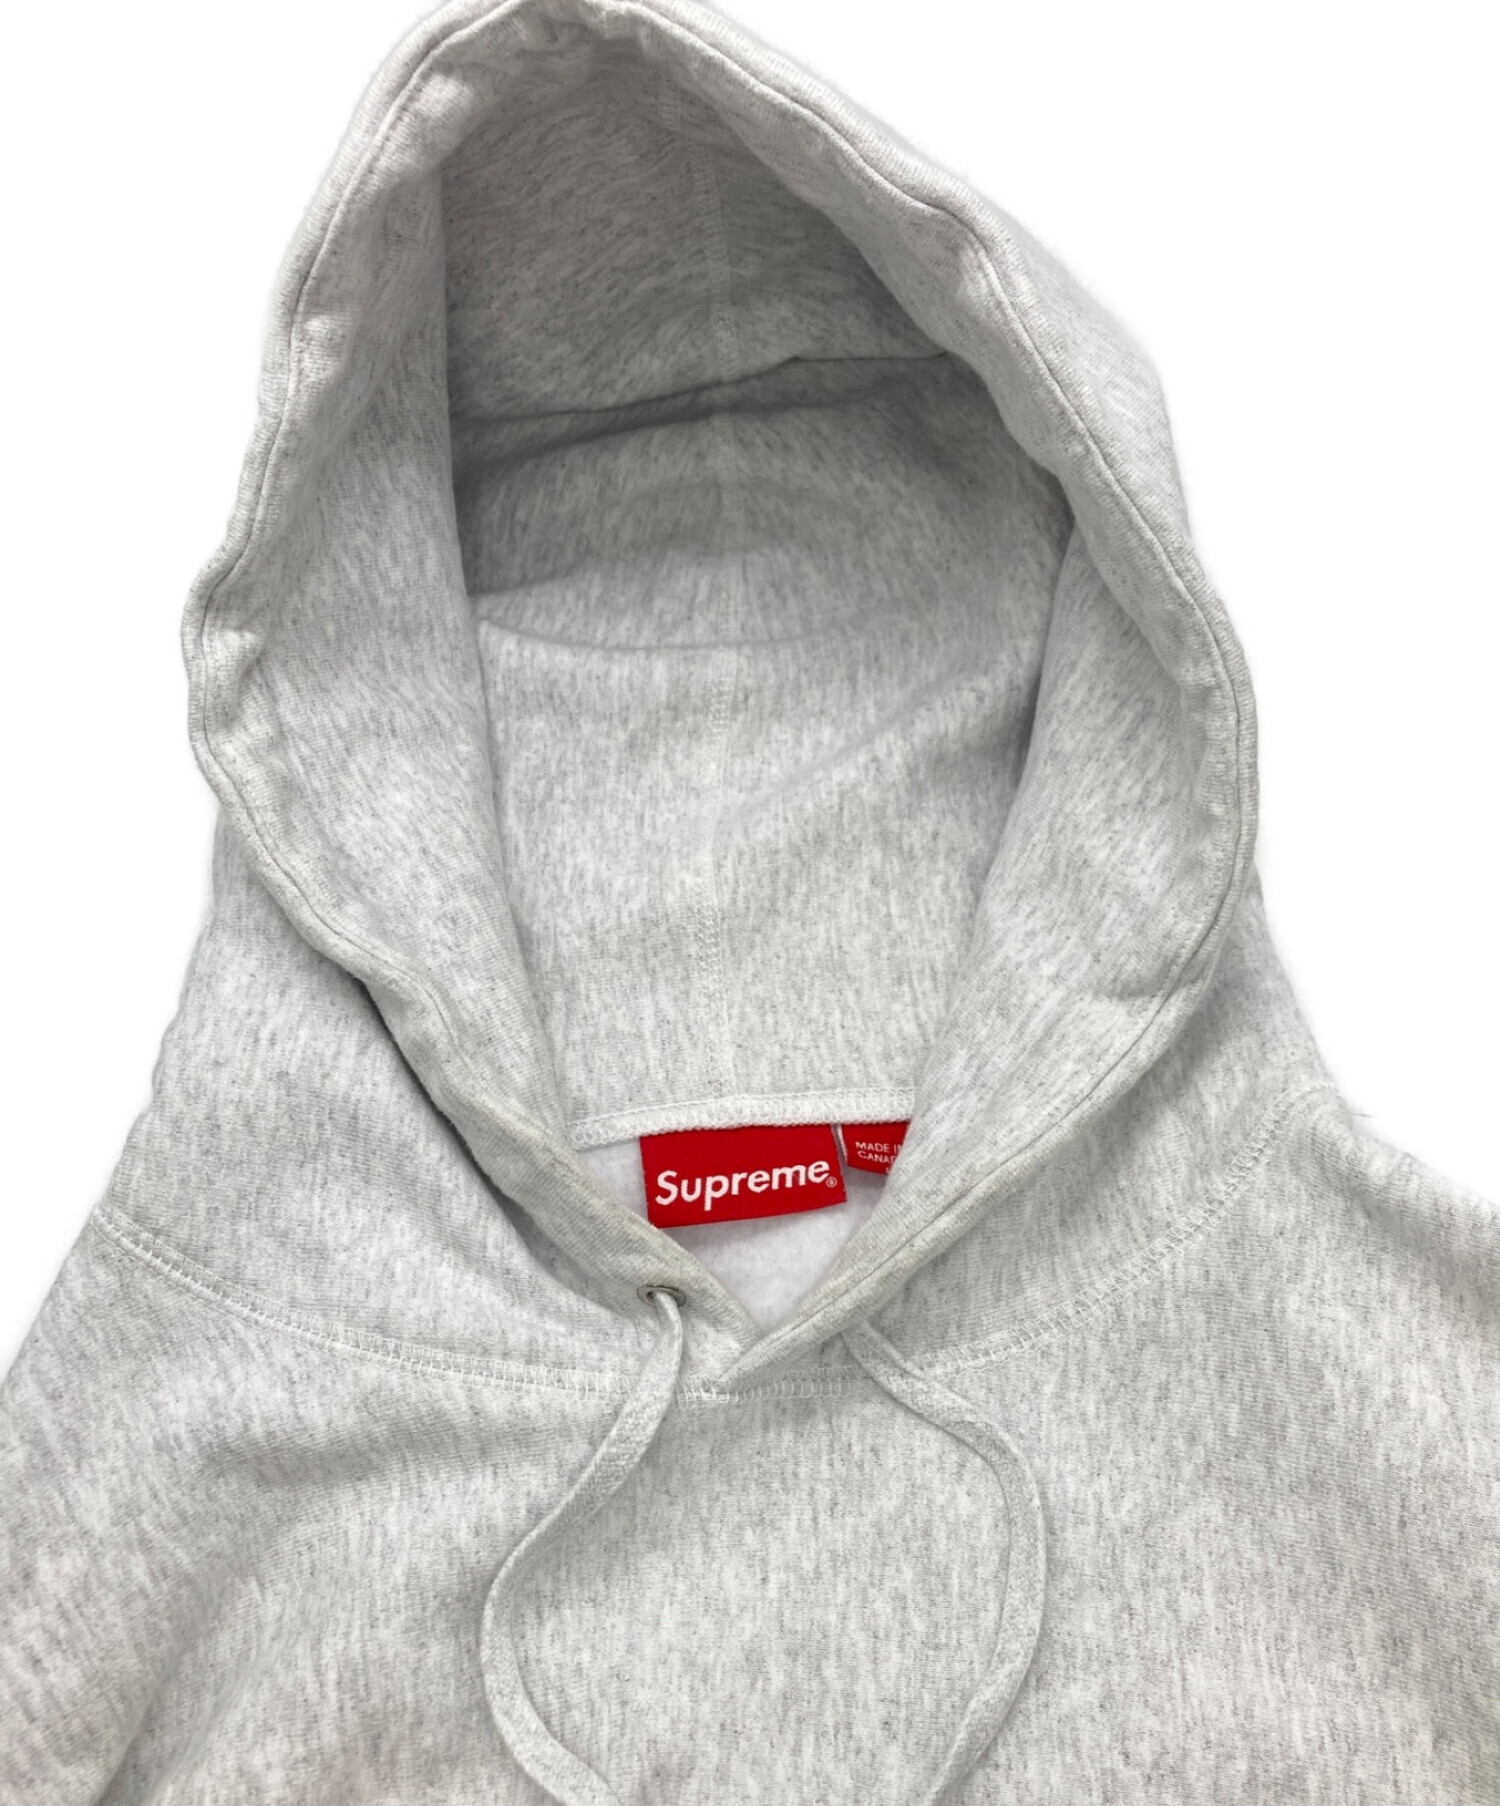 Supreme (シュプリーム) Capital Hooded Sweatshirt グレー サイズ:XL